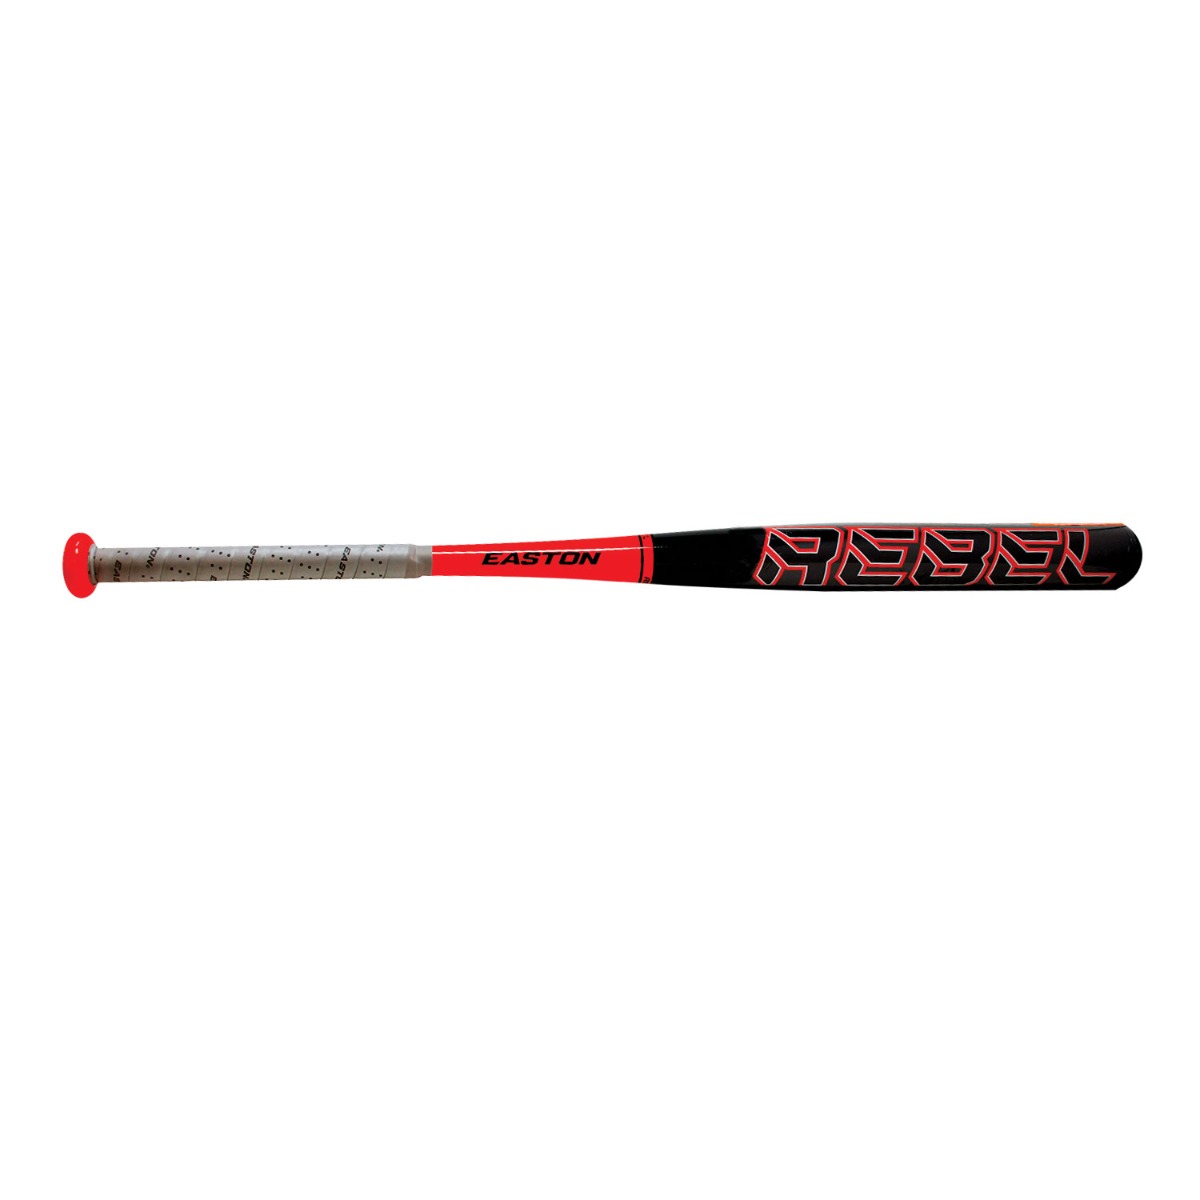 Easton 34" High Quality Softball Bat